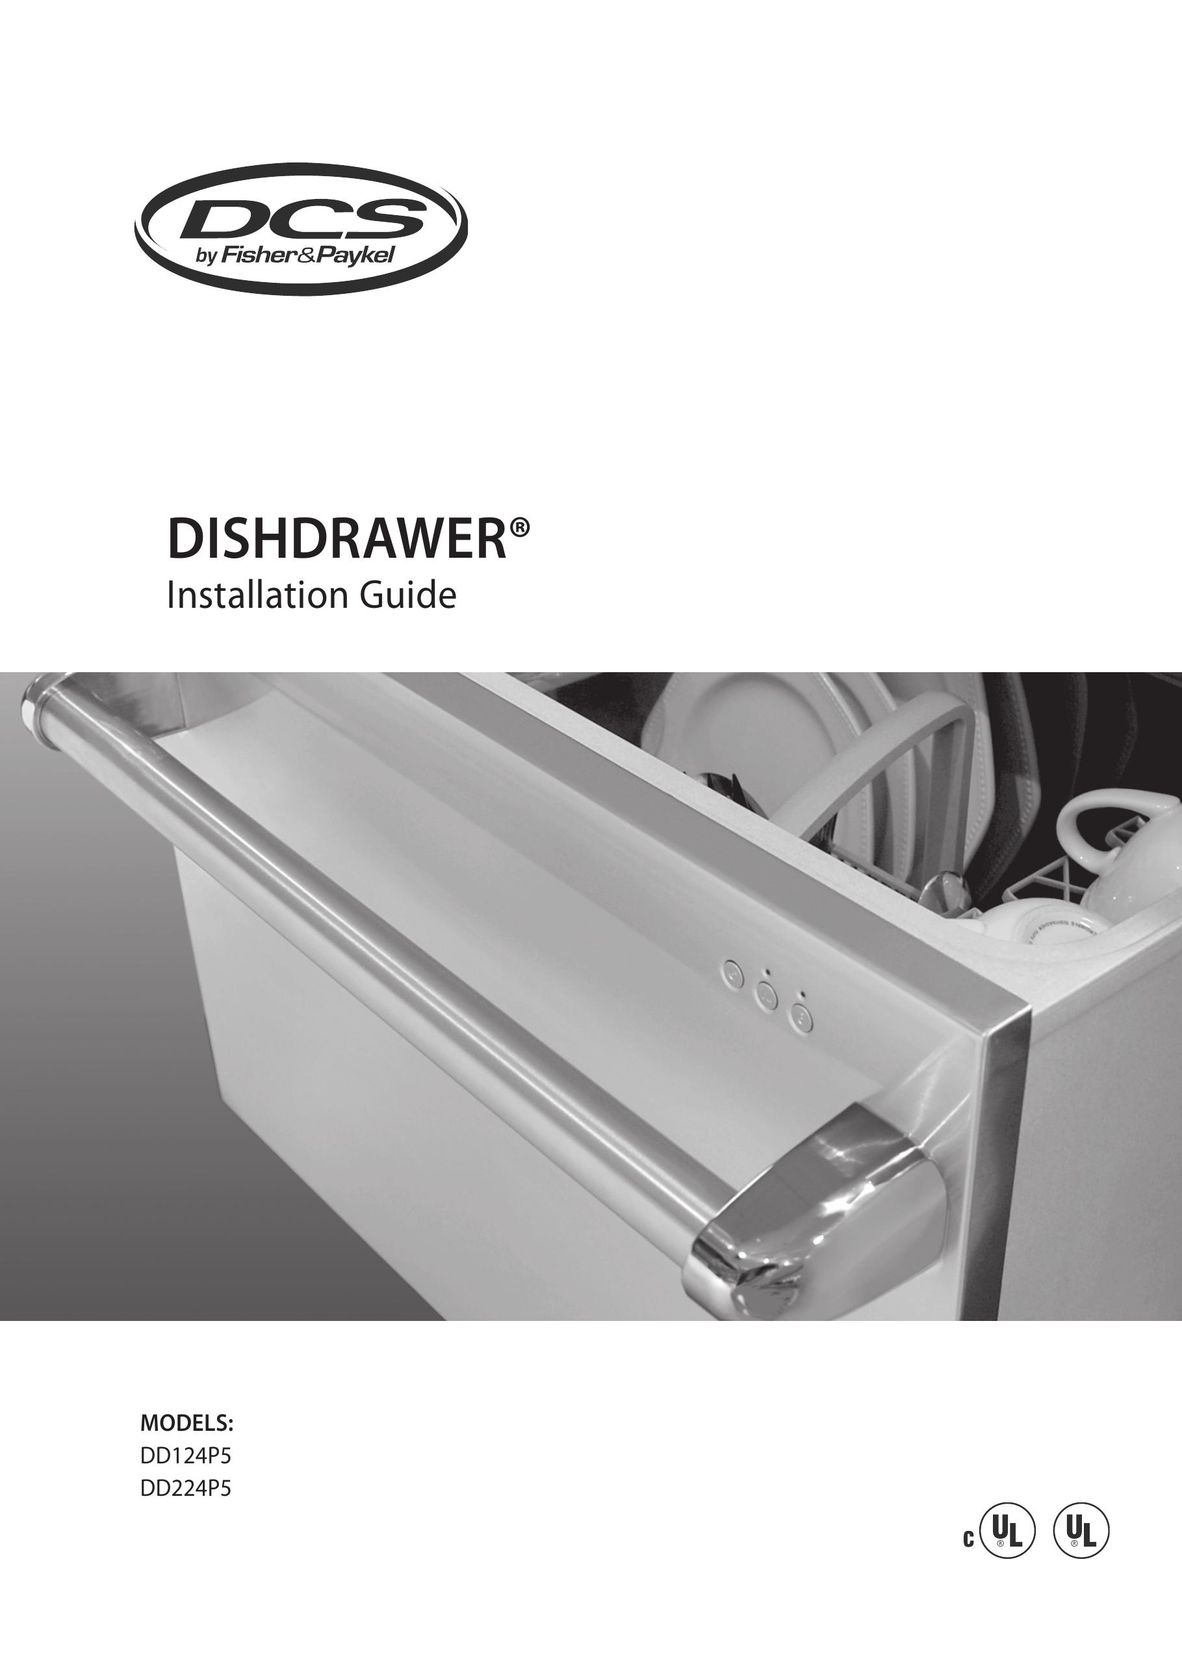 Fisher & Paykel DCS DD224P5 Dishwasher User Manual